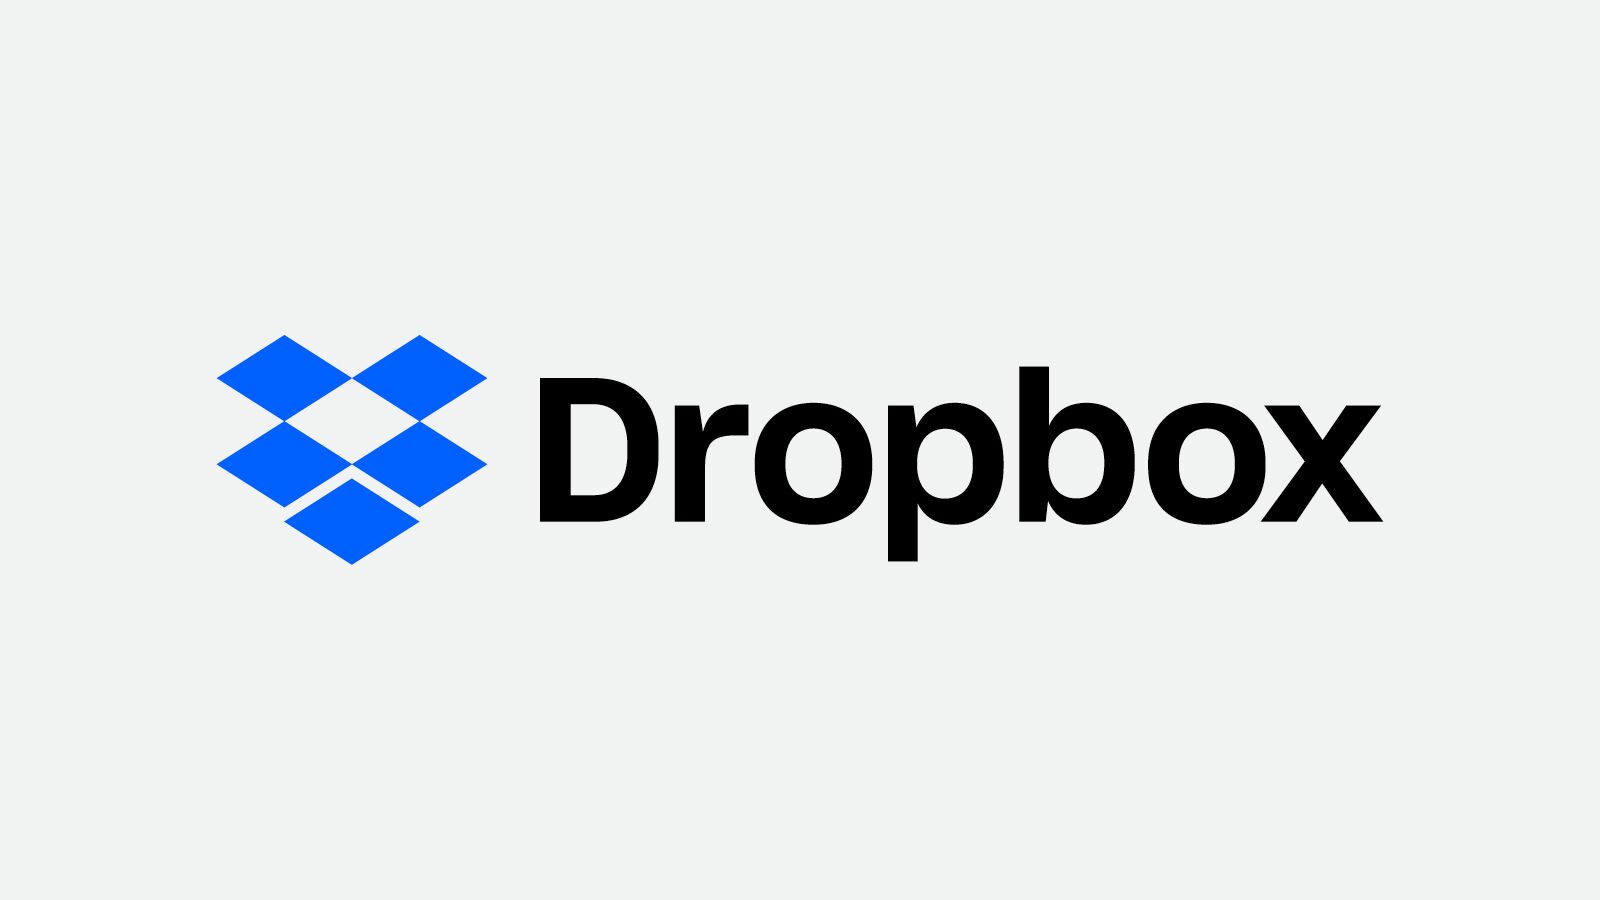 Télécharger Dropbox